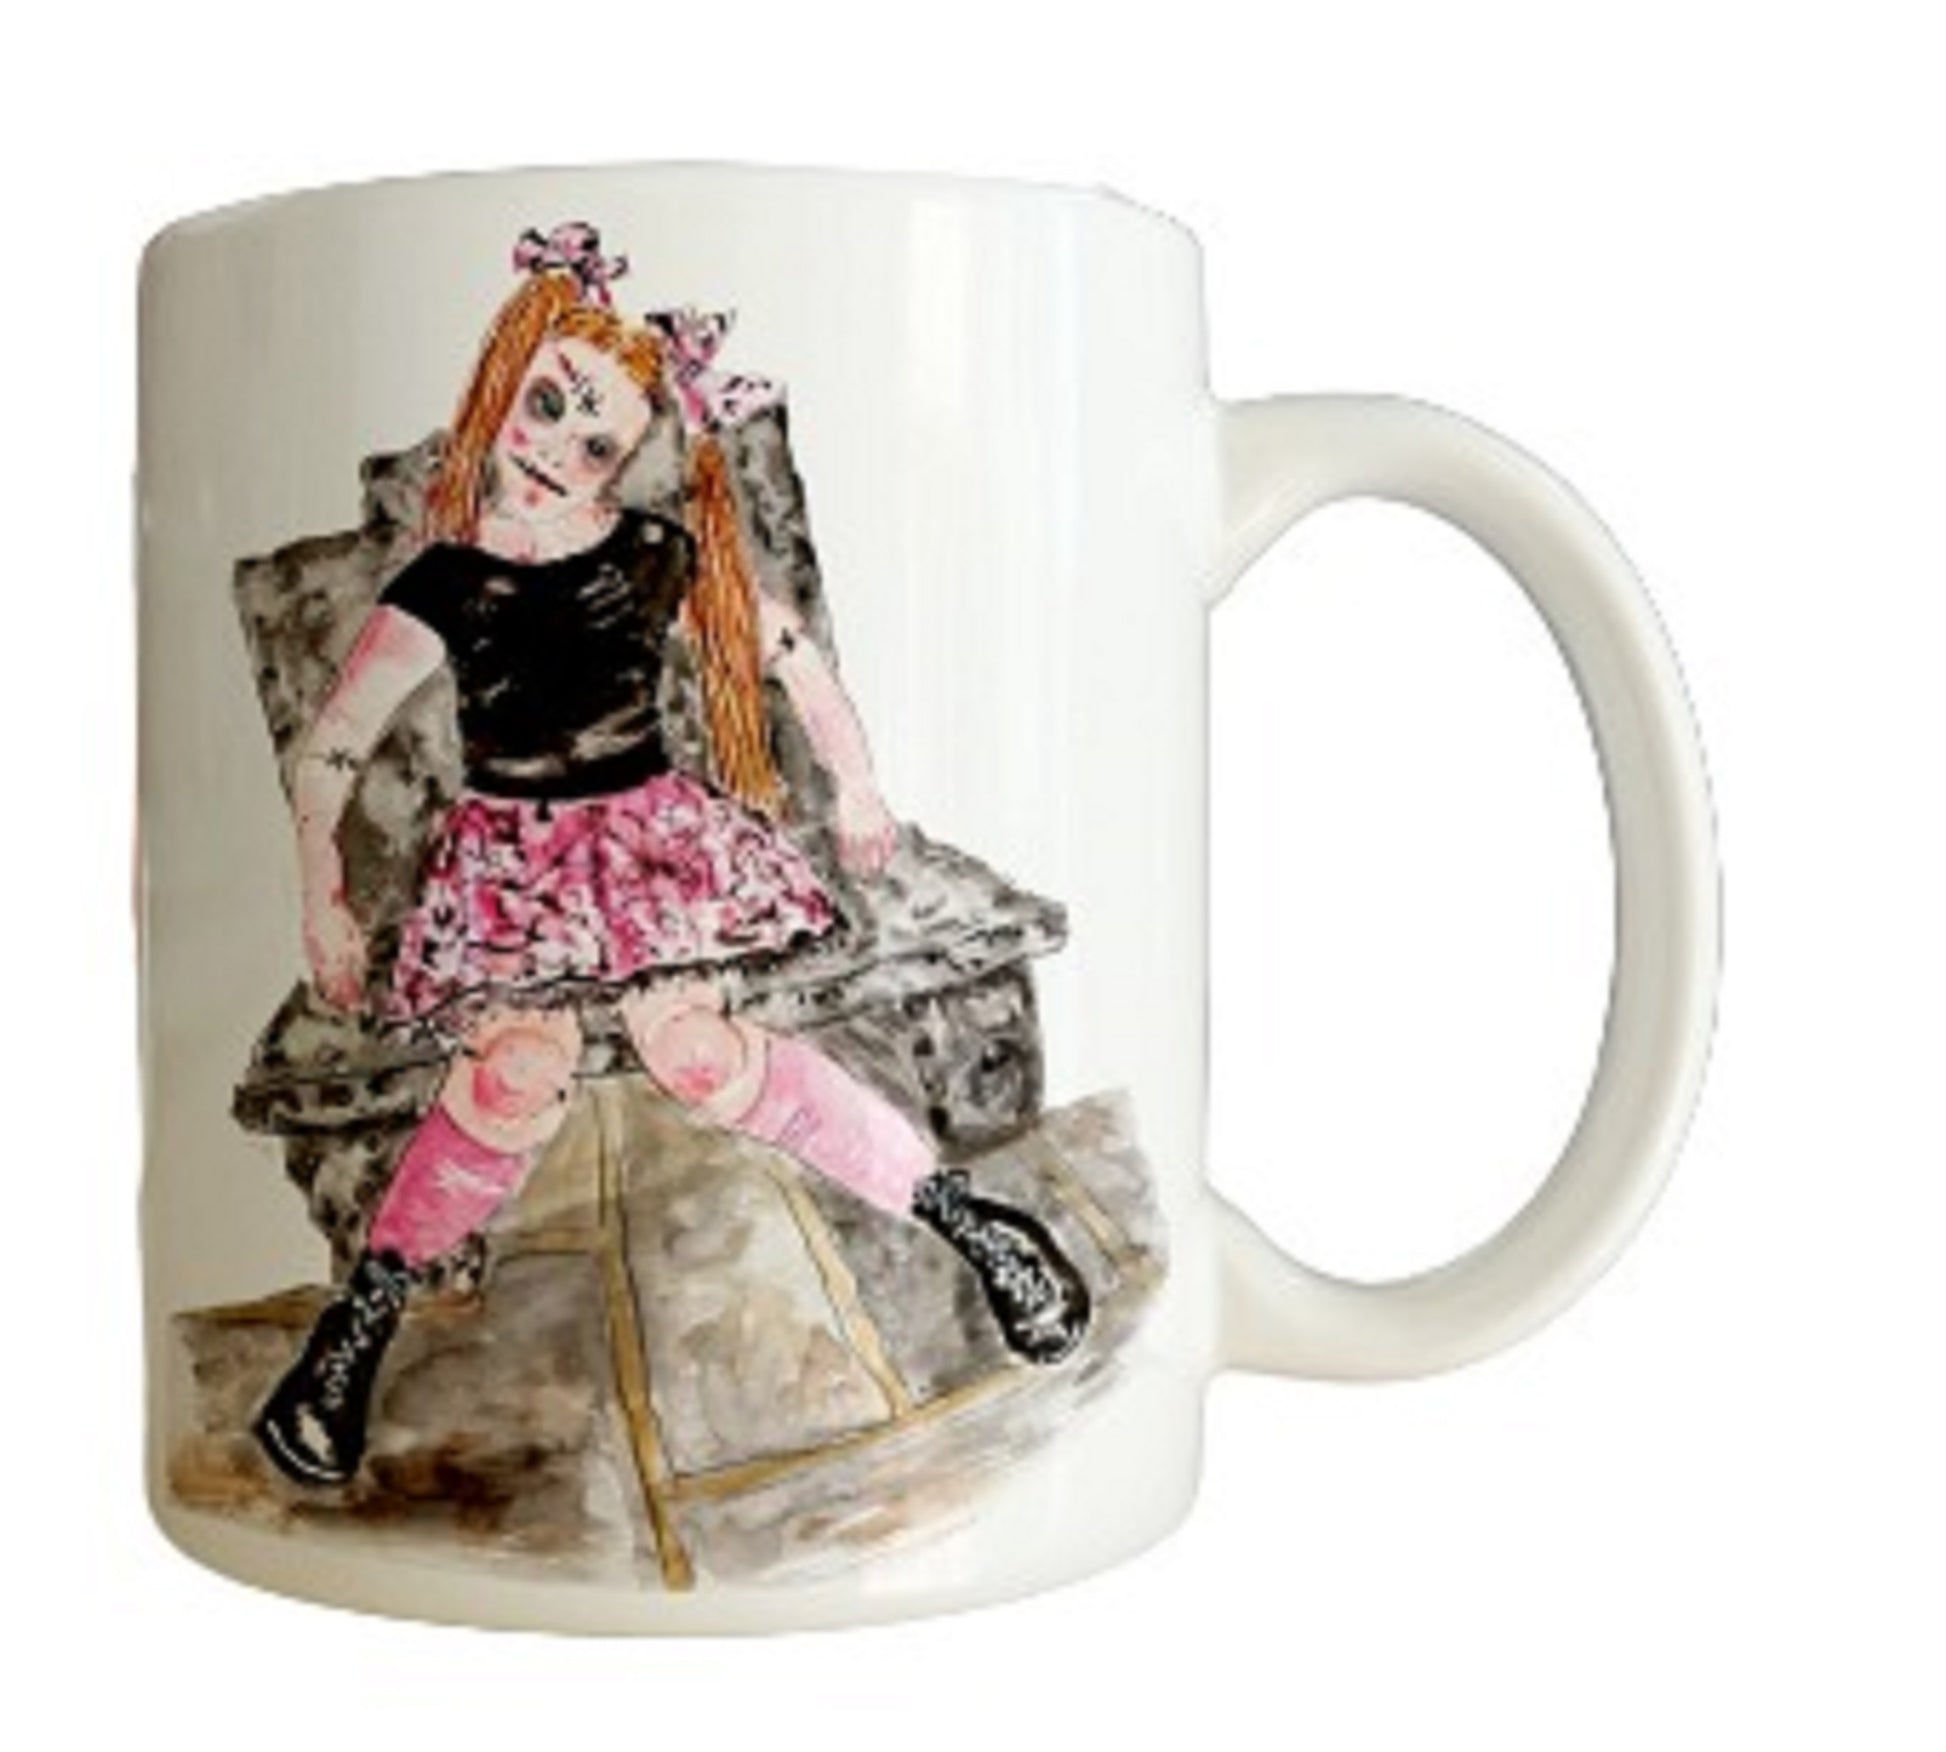  Gothic Girl Halloween Coffee Mug by Free Spirit Accessories sold by Free Spirit Accessories